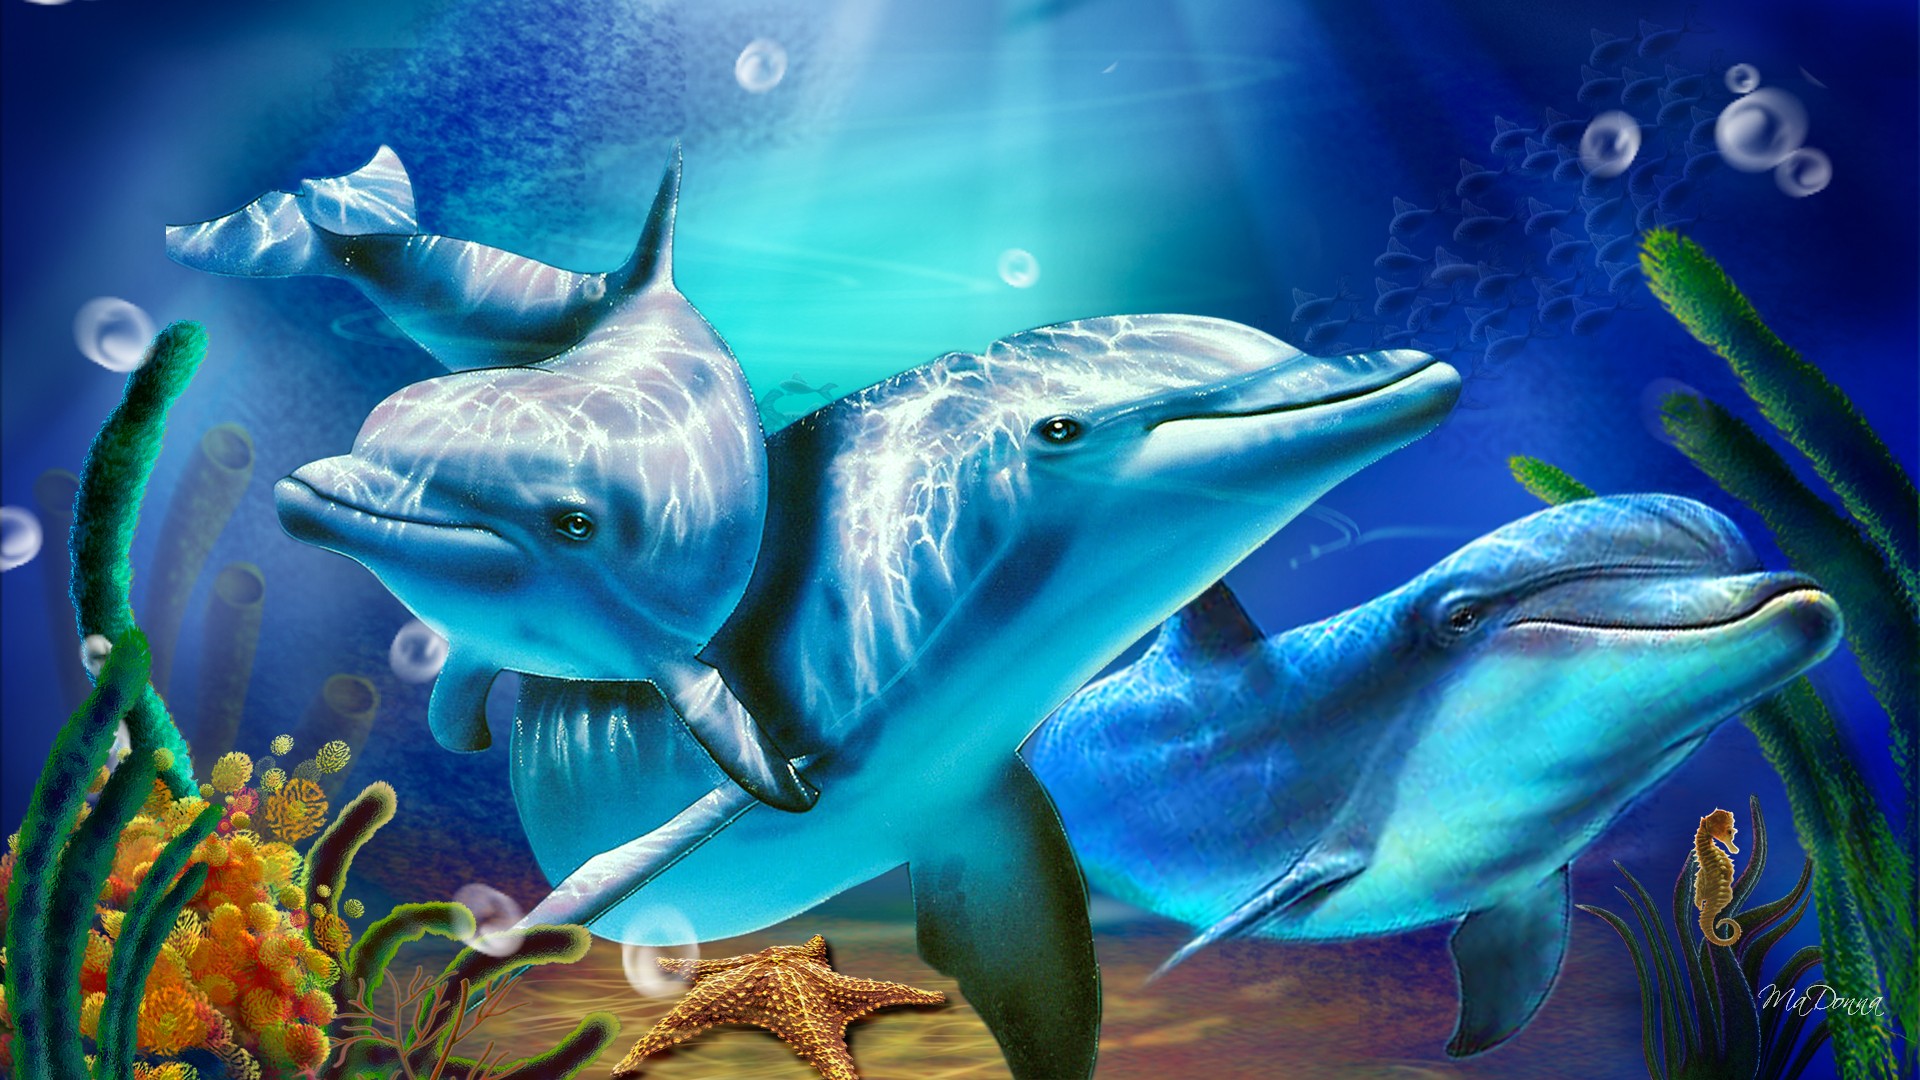 46+] Free Animated Dolphin Wallpaper Desktop - WallpaperSafari